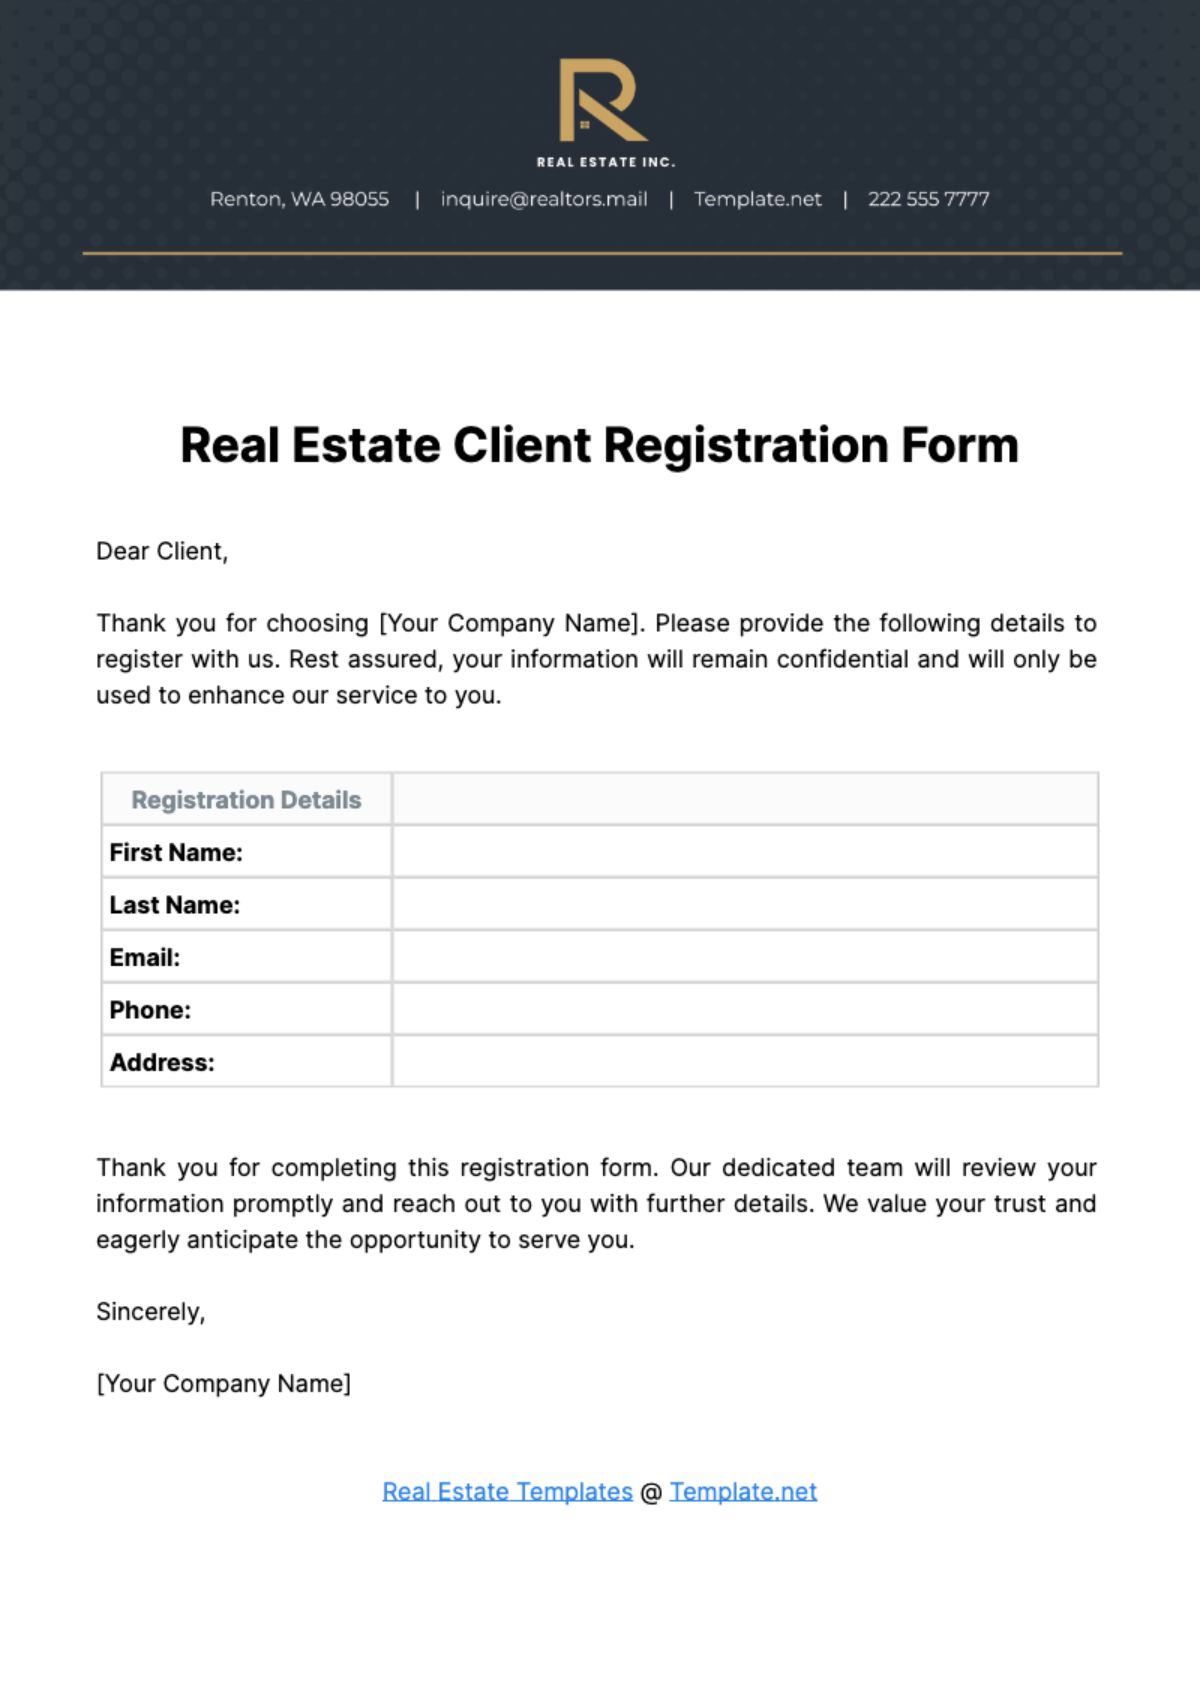 Real Estate Client Registration Form Template